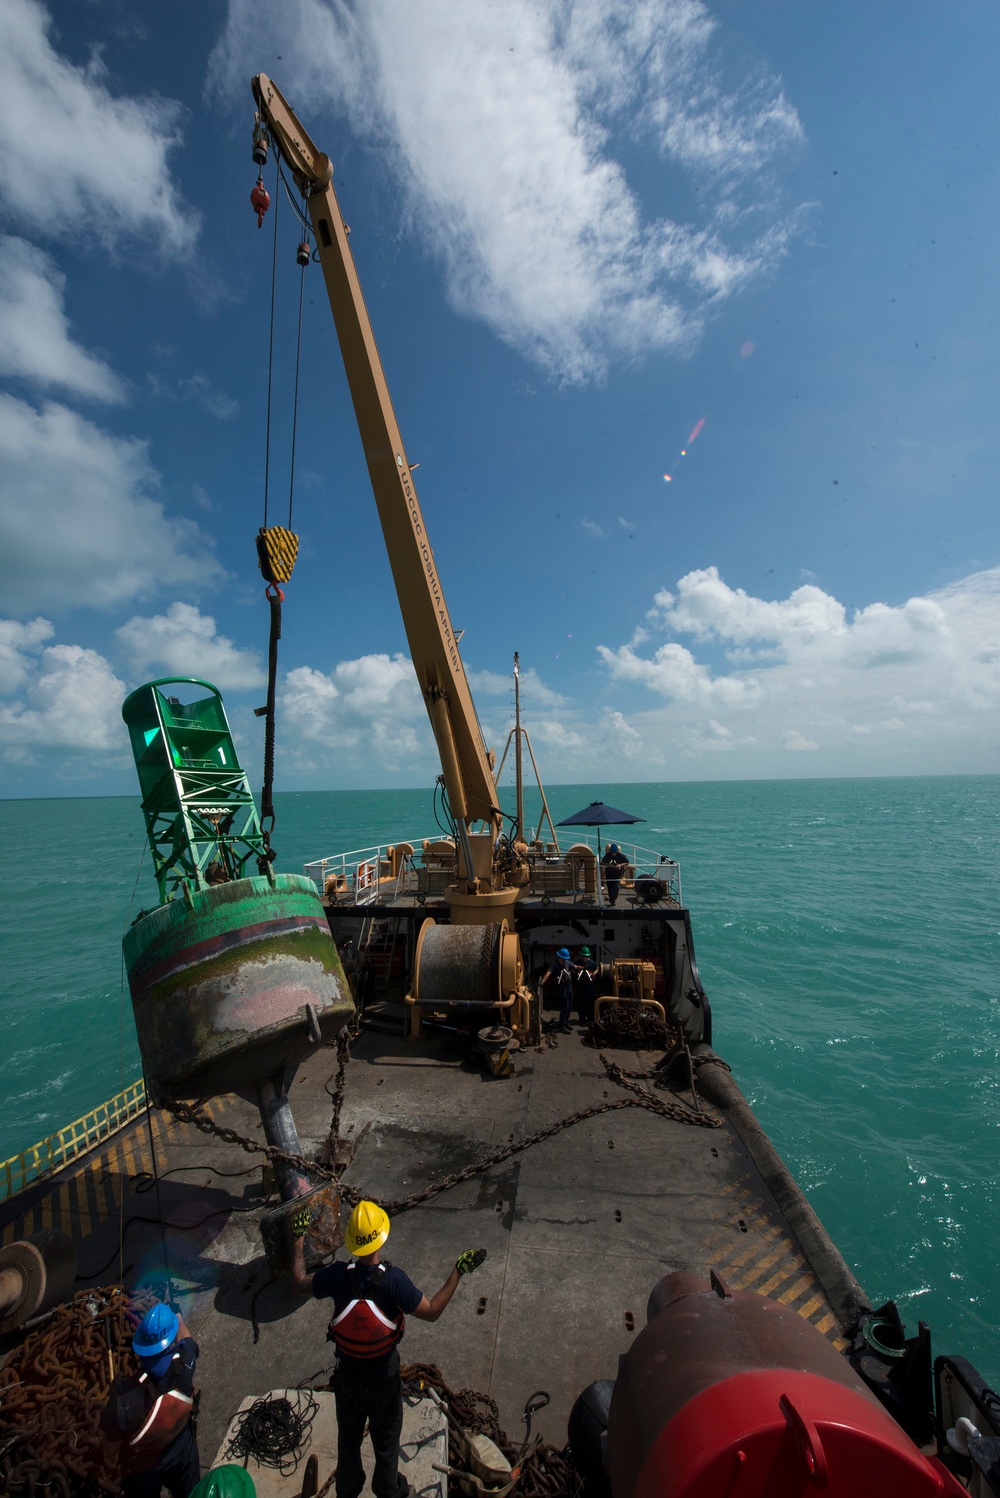 DVIDS - Images - Coast Guard Cutter Joshua Appleby work ATON near Key West  [Image 4 of 4]